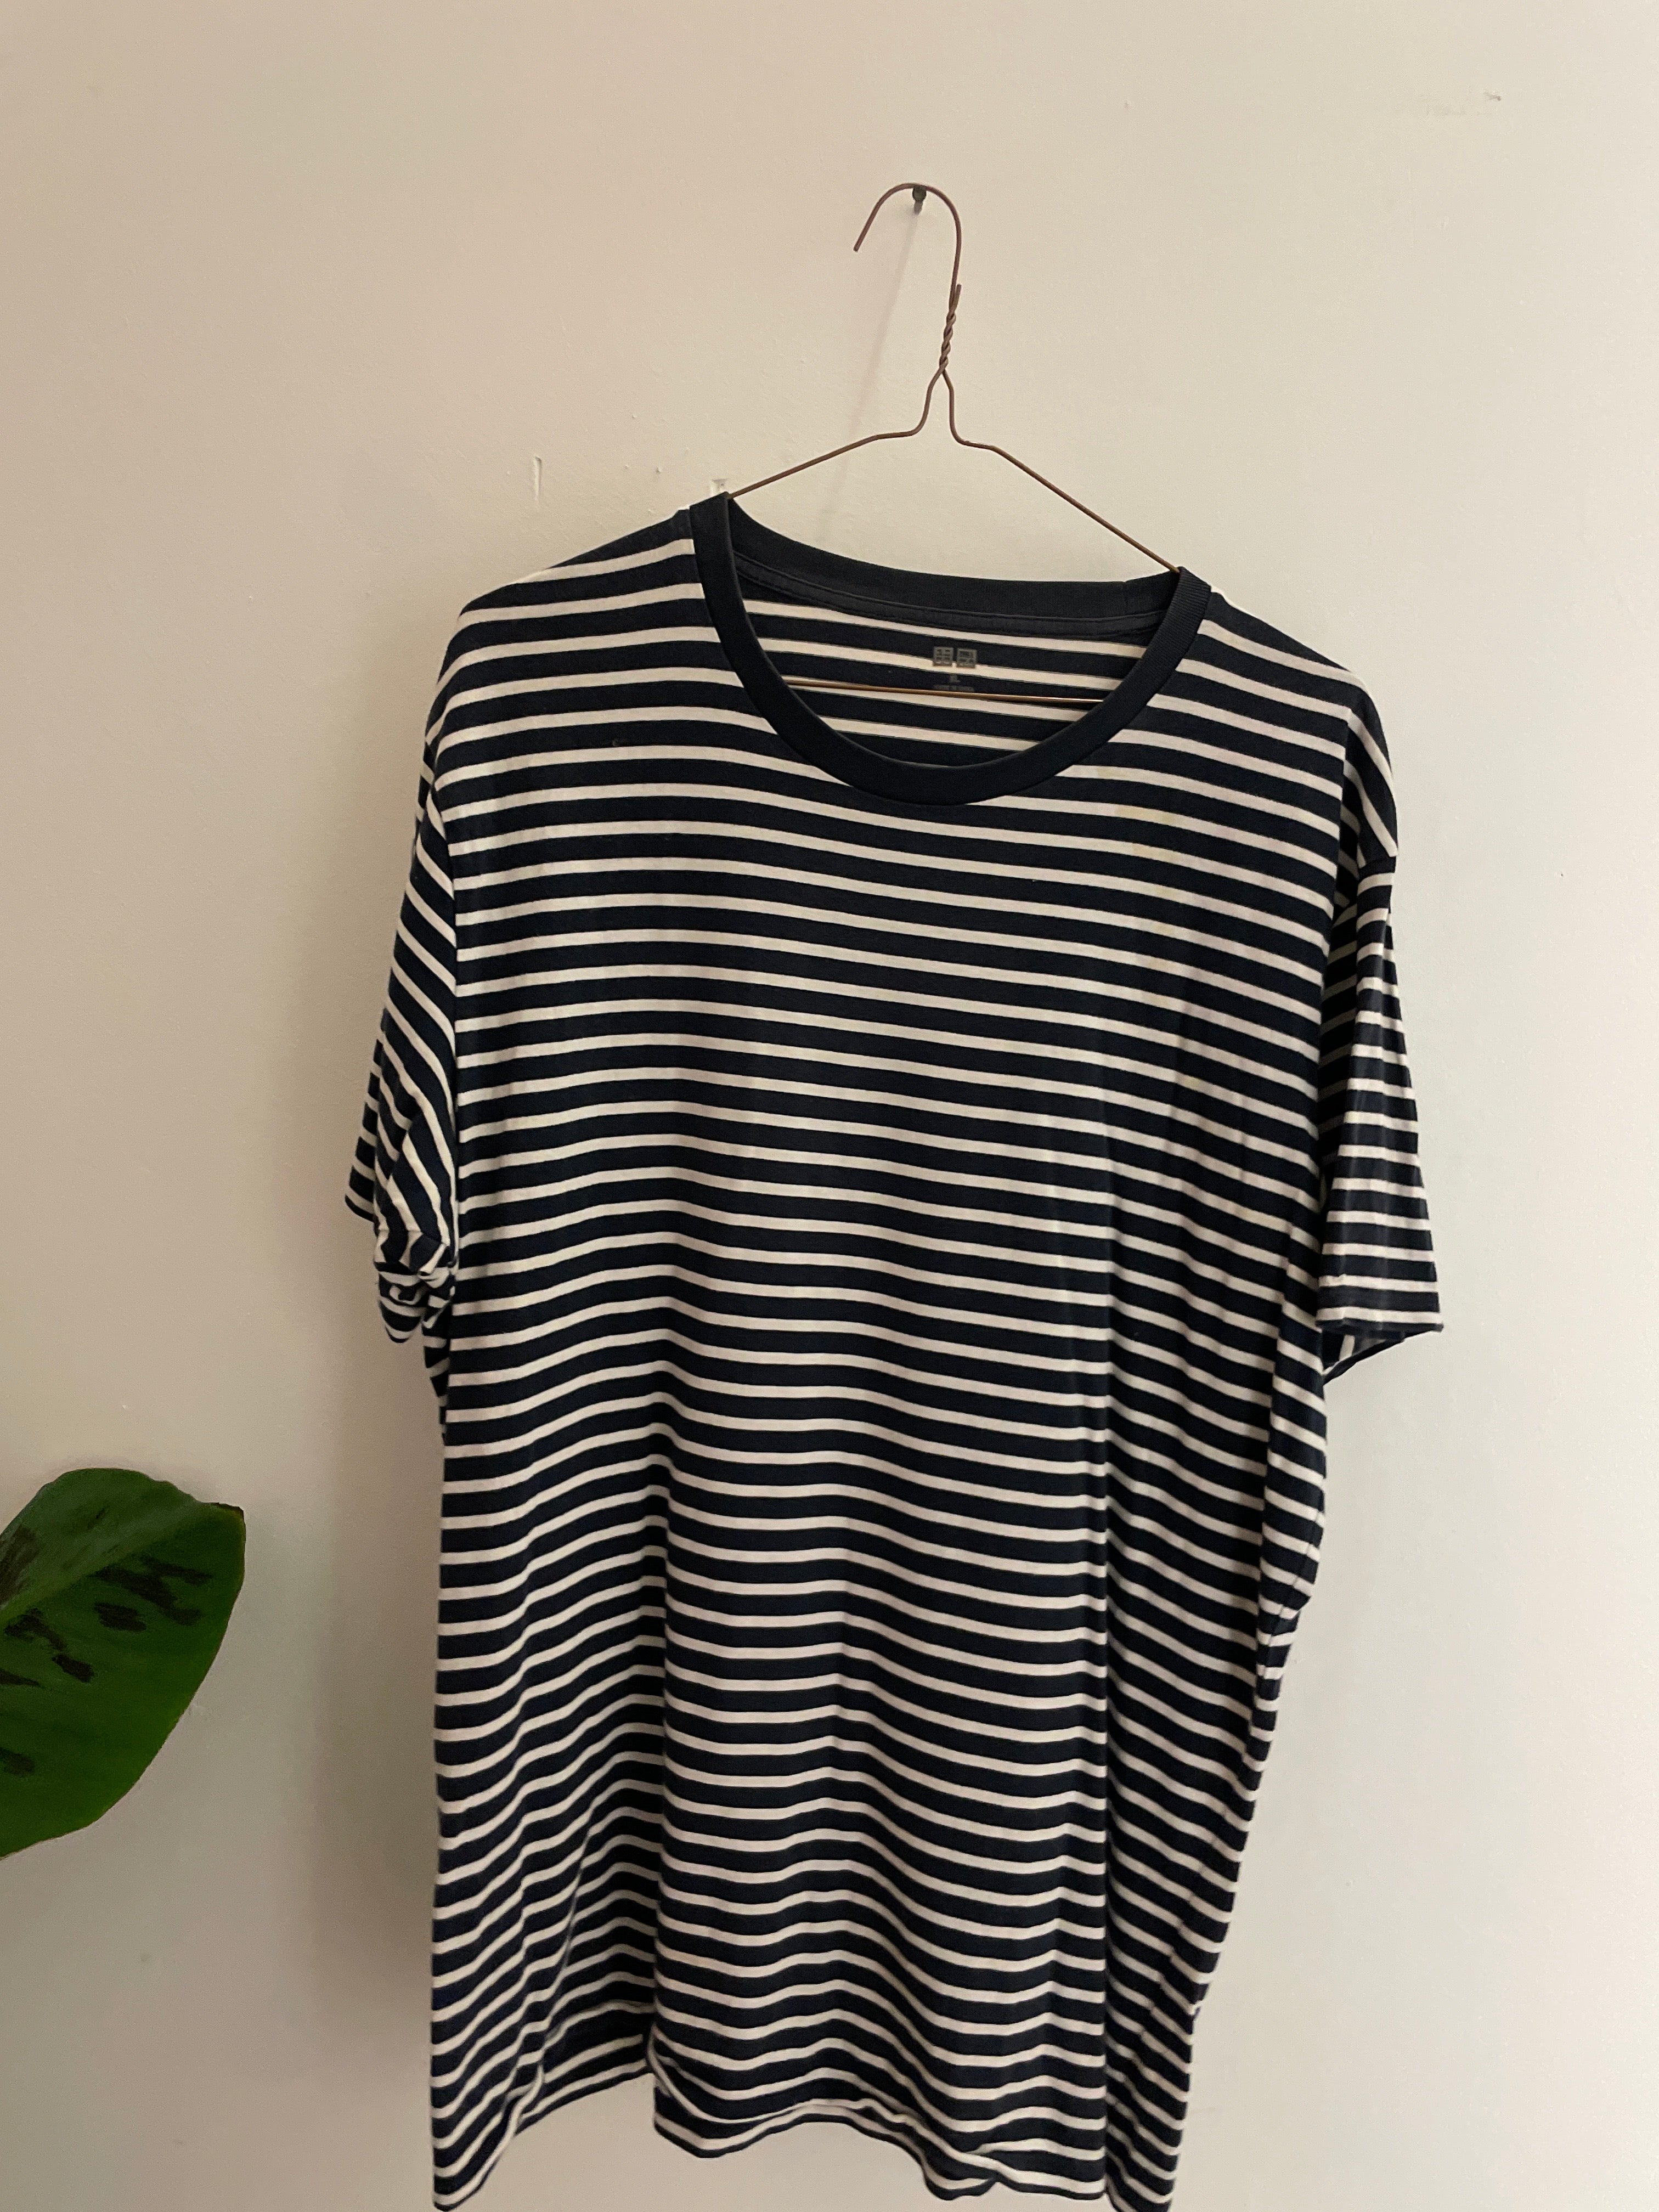 Vintage blue stripe tshirt size XL